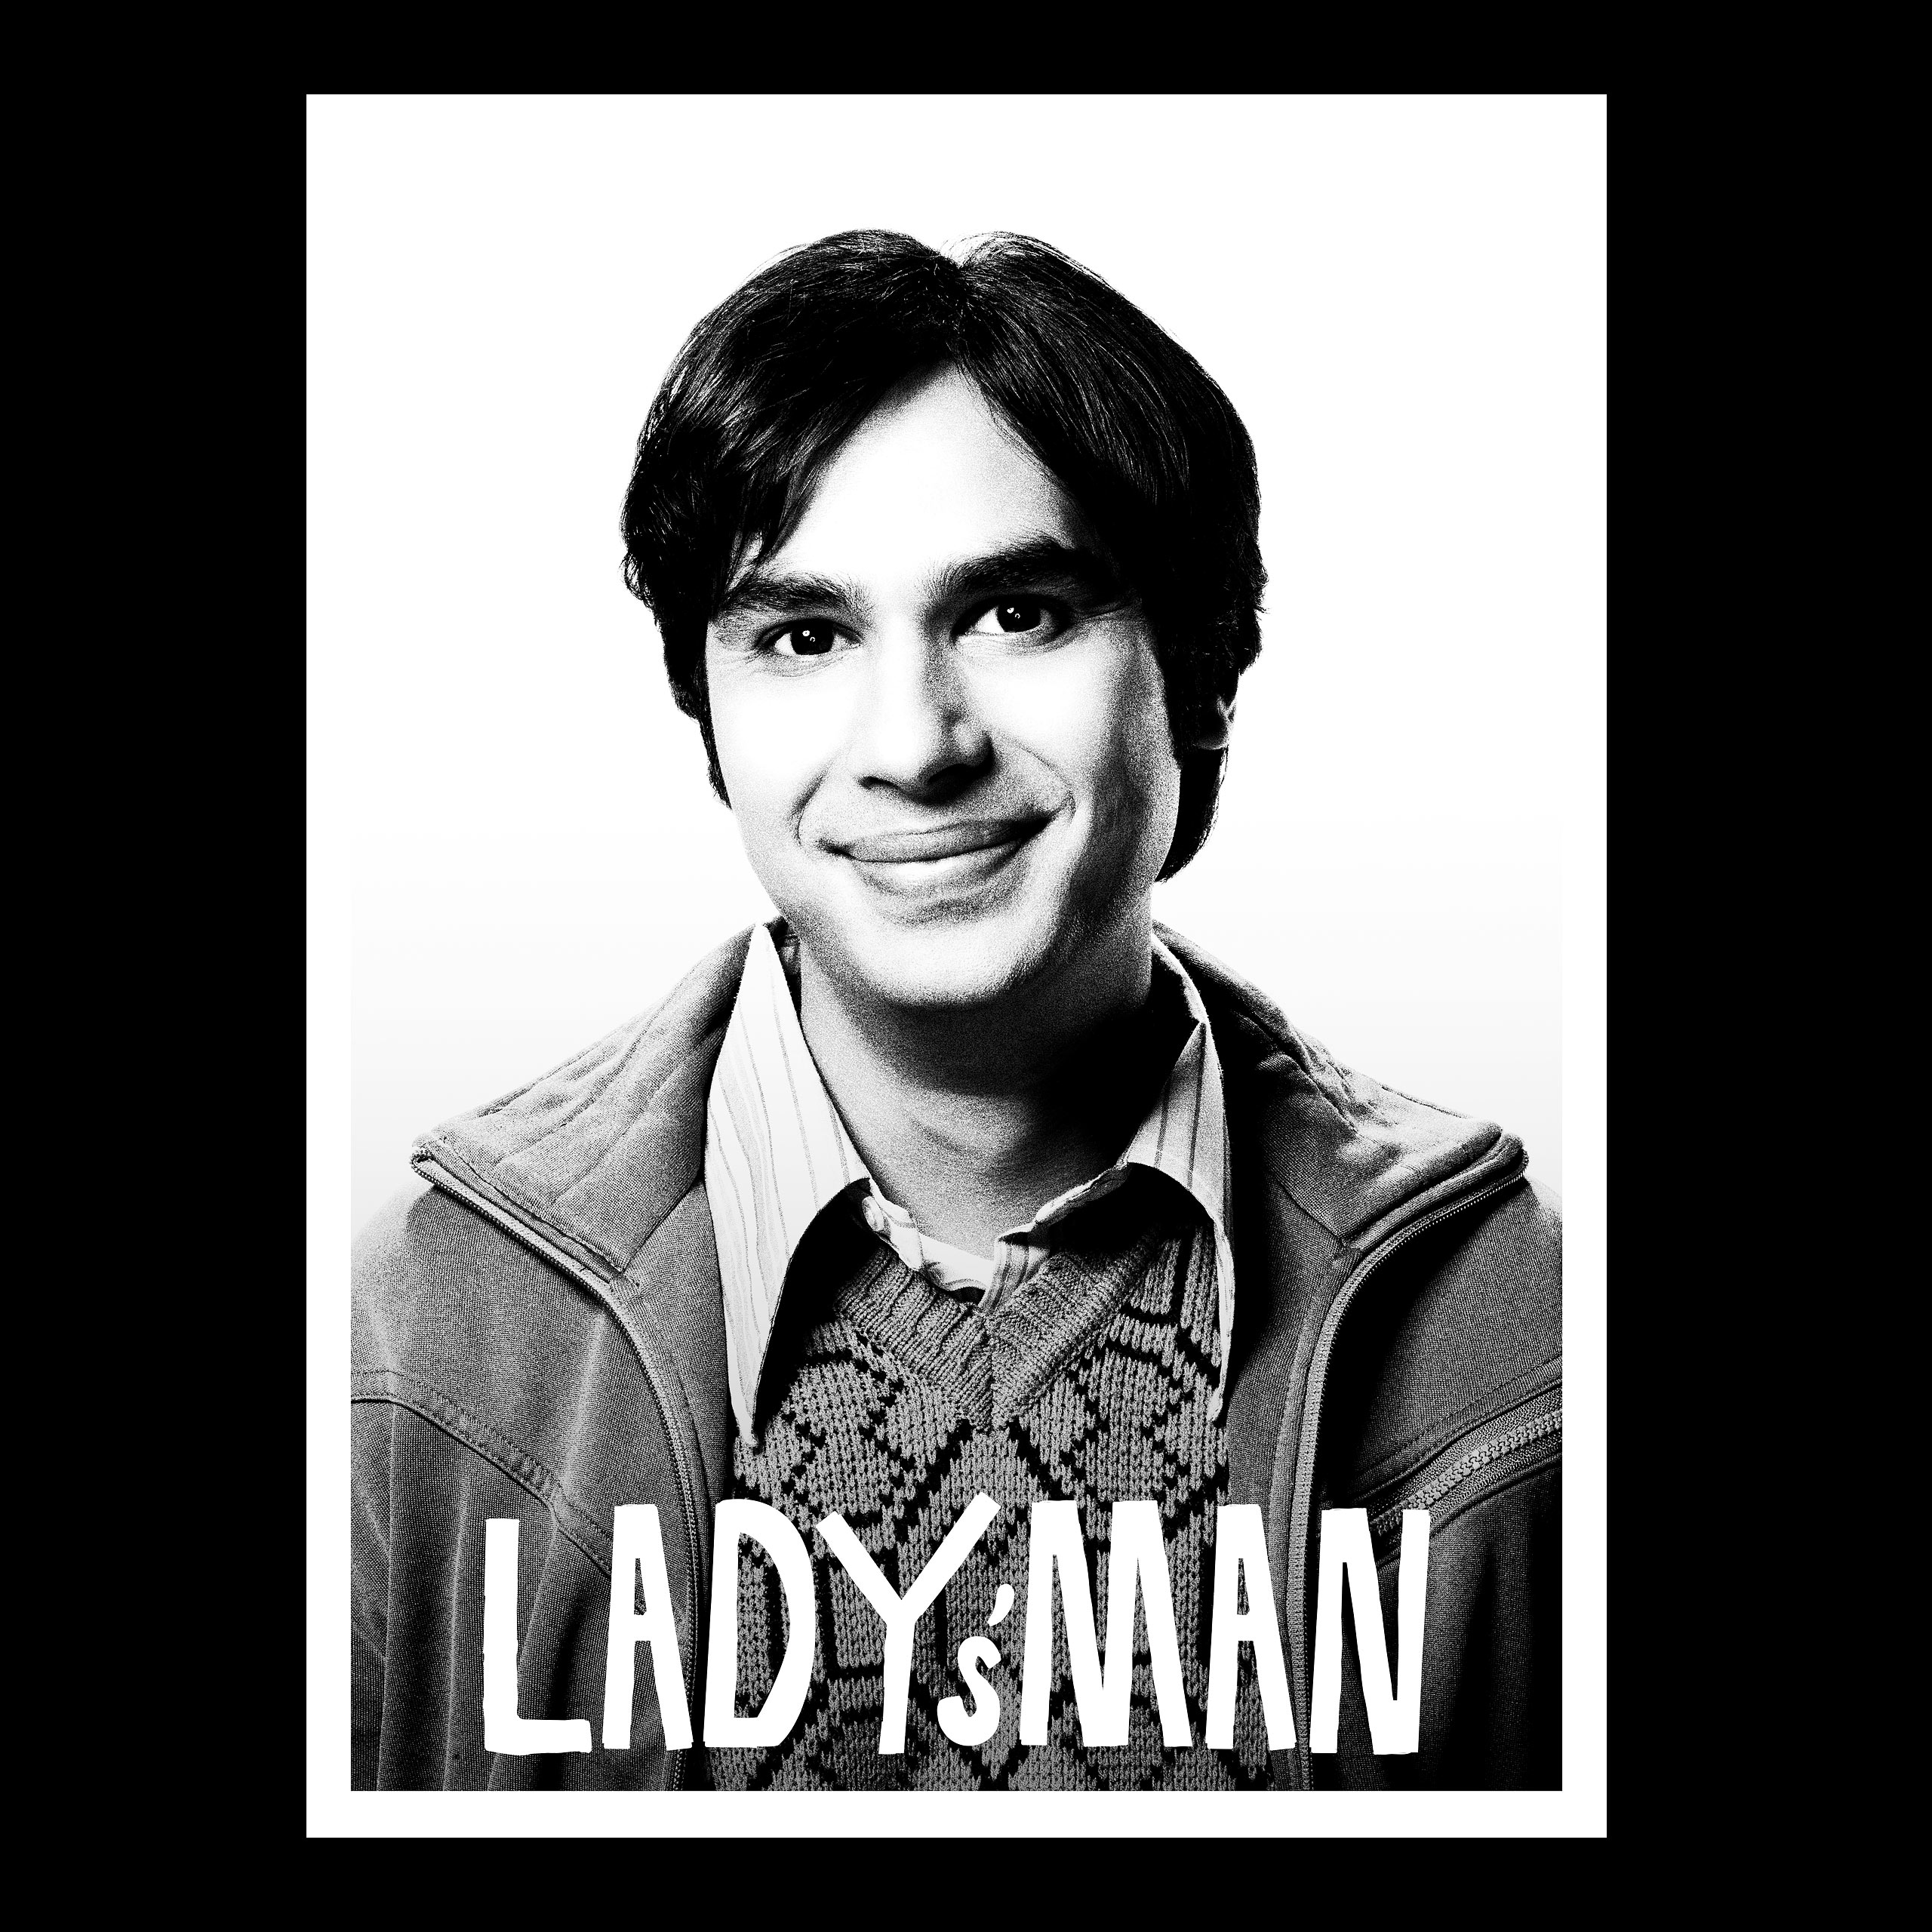 Raj Lady's Man T-Shirt schwarz - The Big Bang Theory